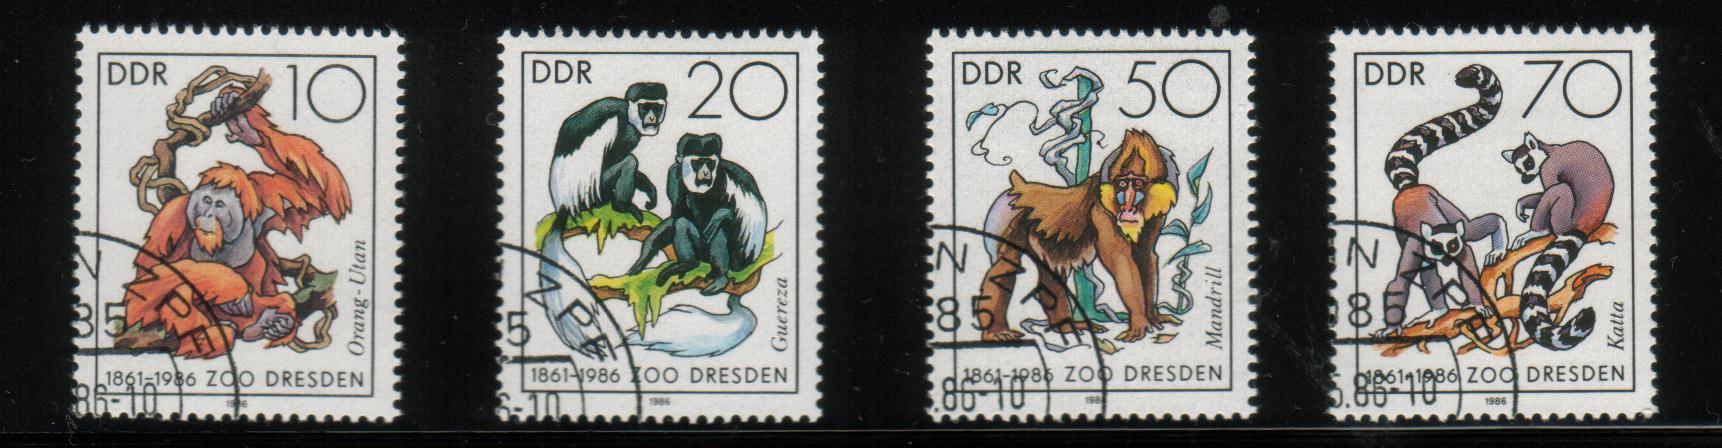 DDR 1986 DRESDEN ZOO (APES) SET OF 4 VFU - Monkeys